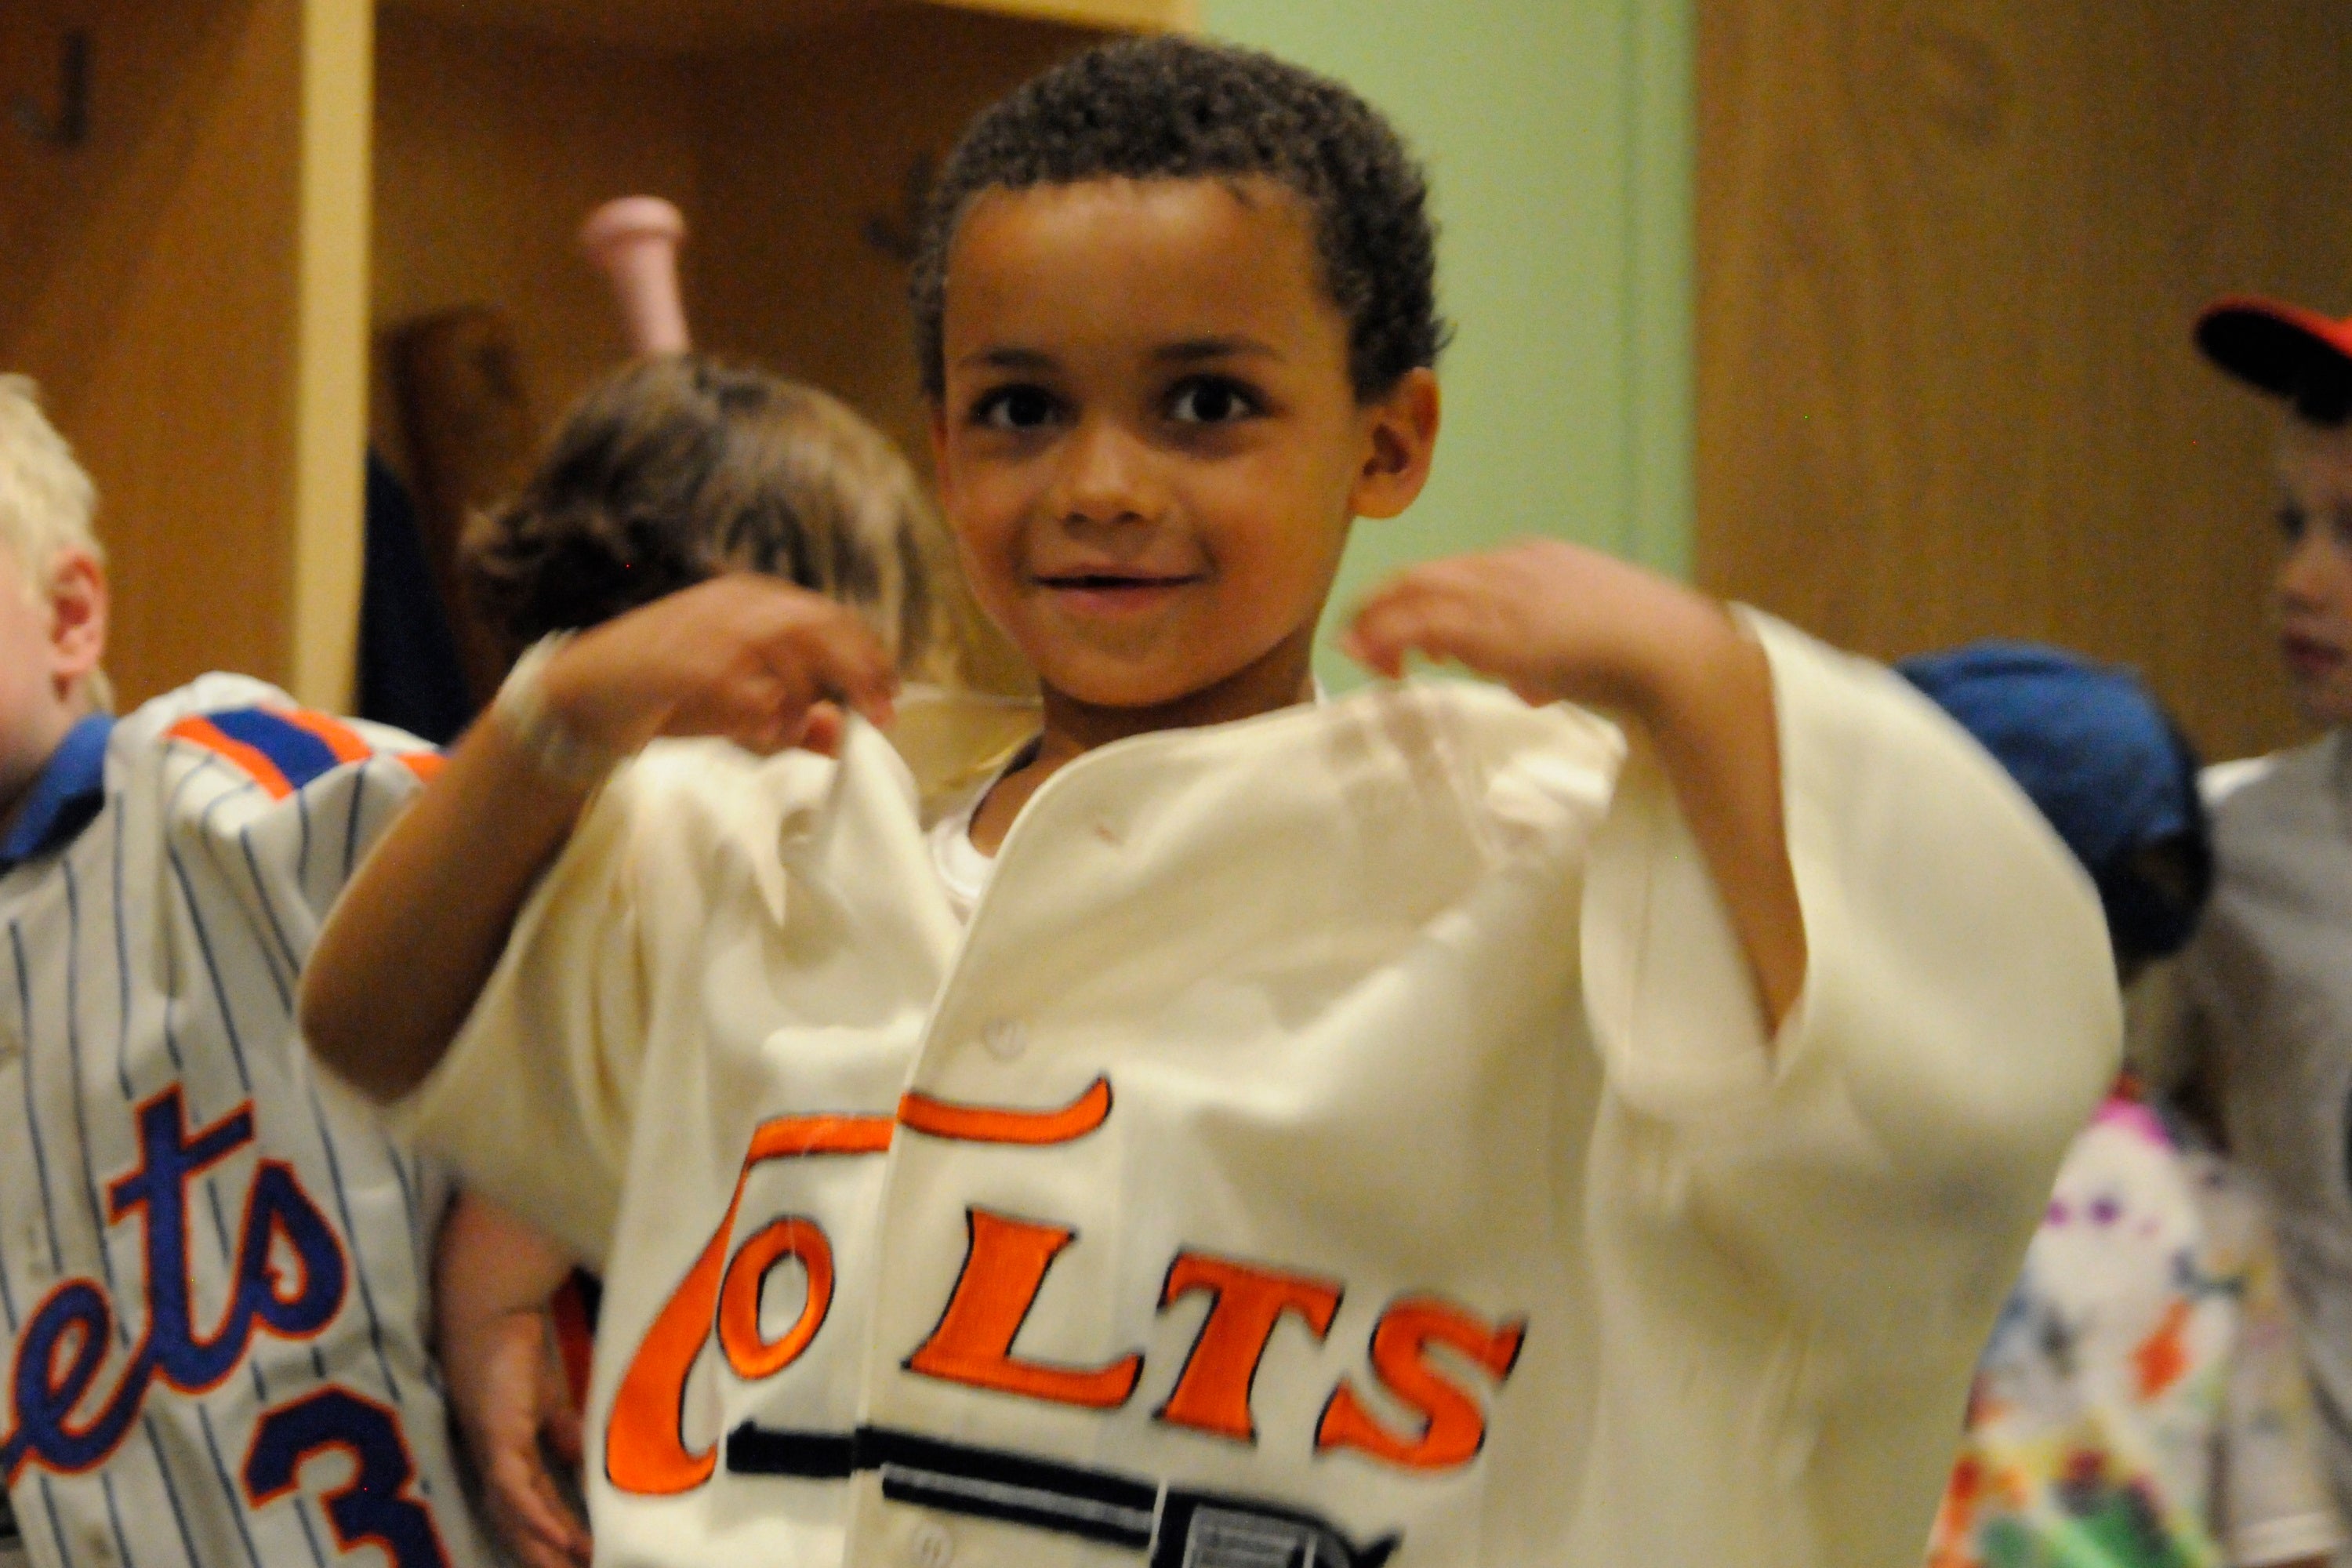 Young boy wearing Colts 45s baseball jersey